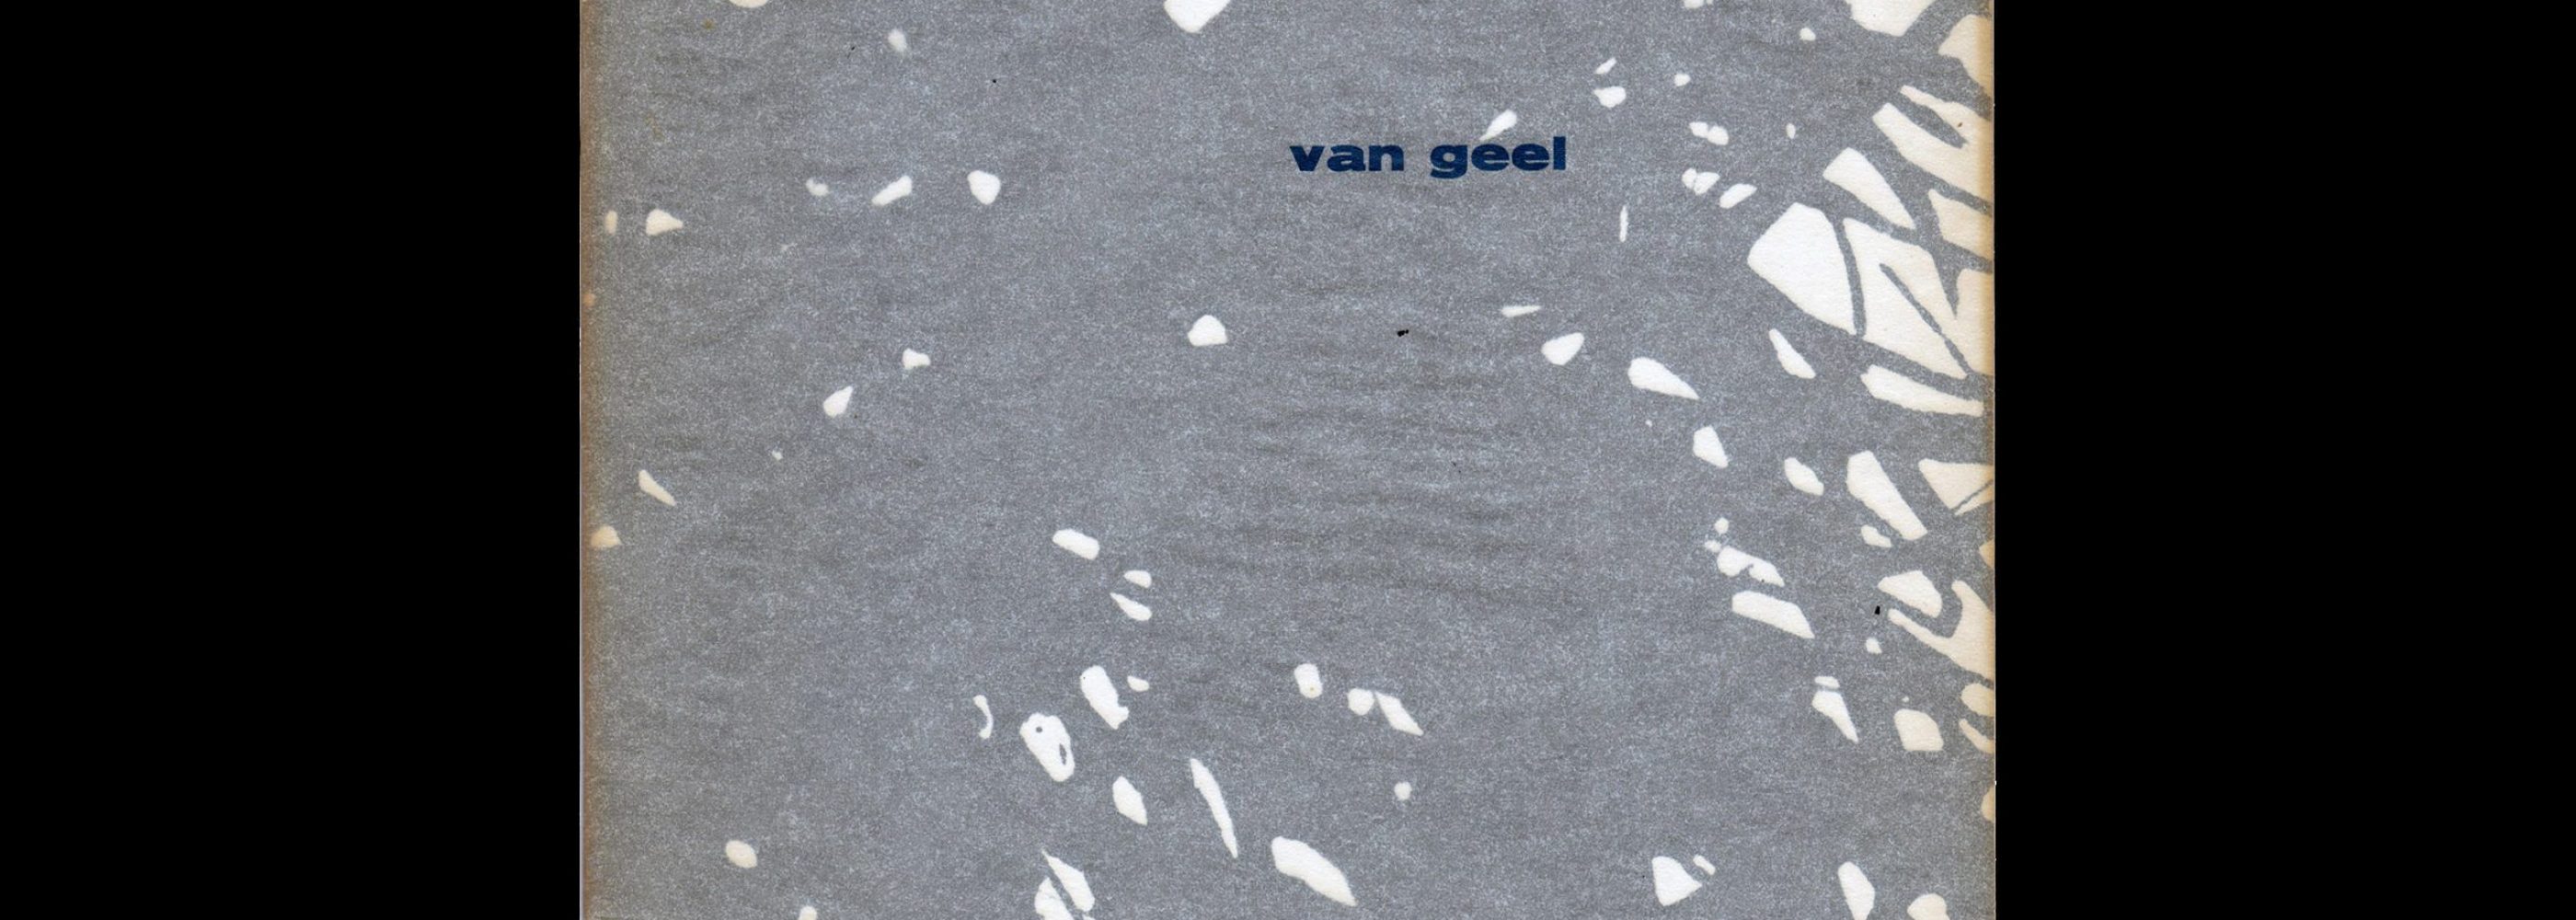 Van Geel, Stedelijk Museum Amsterdam, 1961 designed by Willem Sandberg